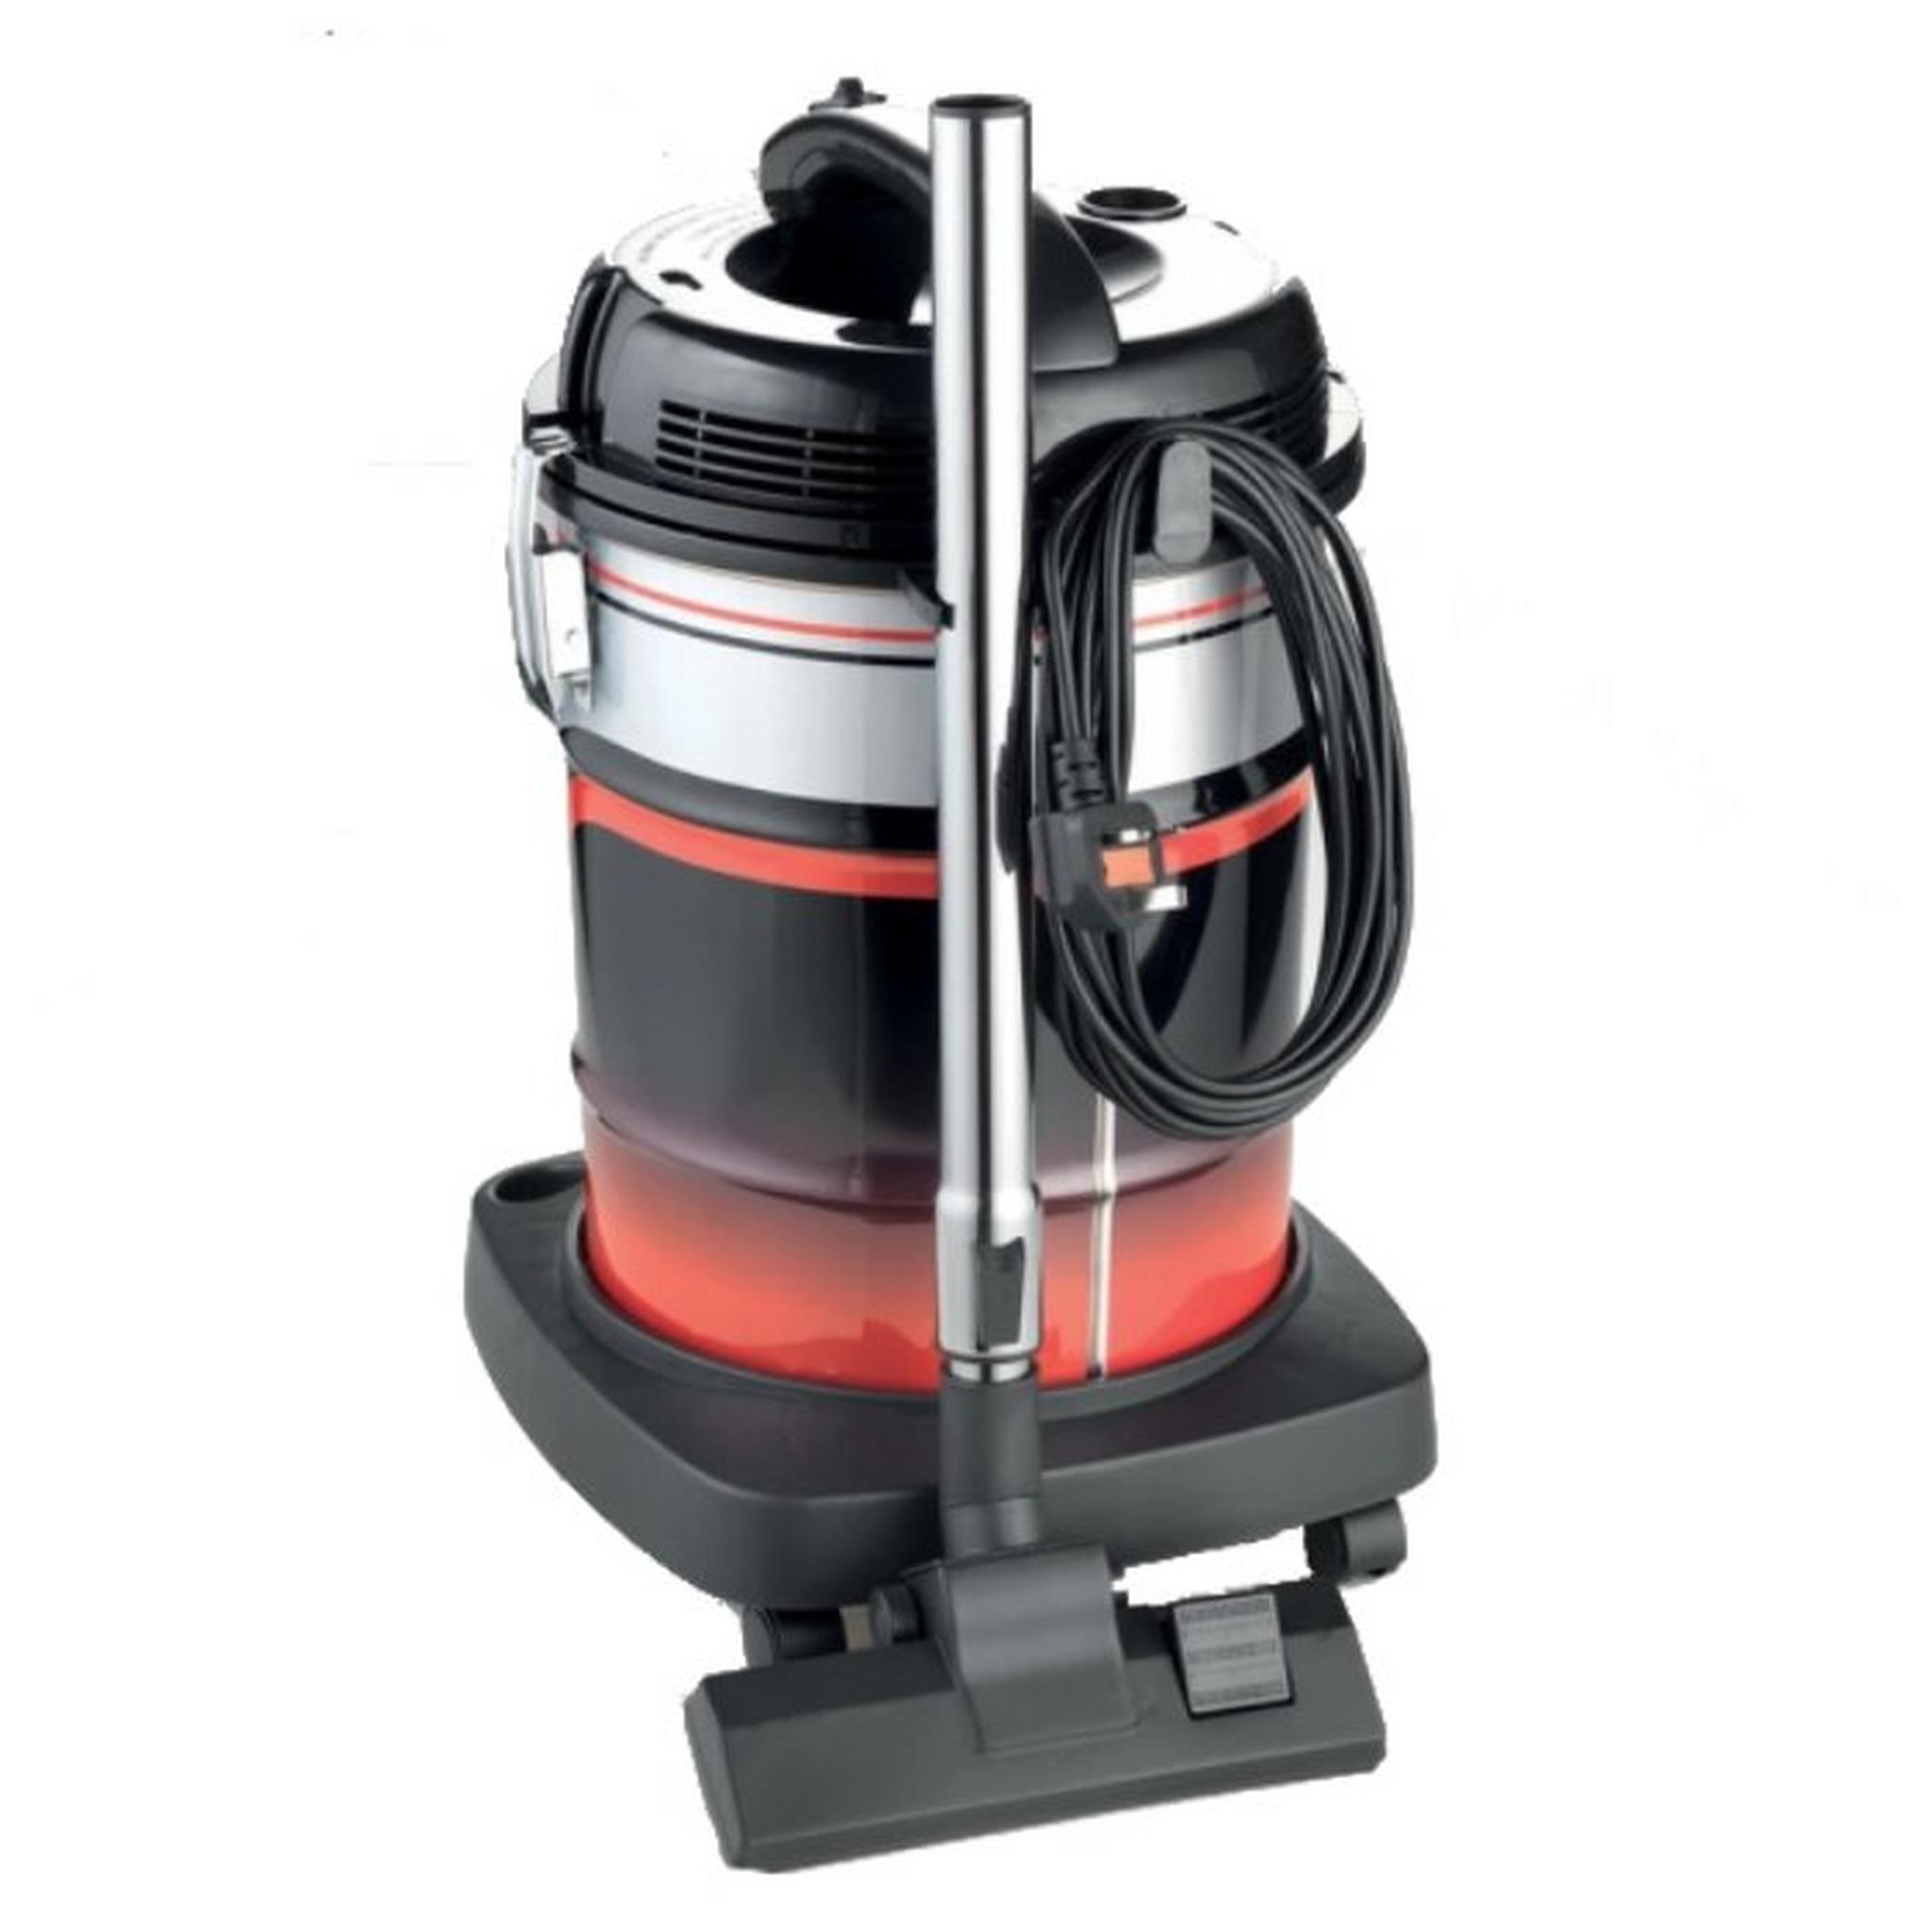 Kenwood Drum Vacuum Cleaner, 2000W,  20 Litre, VDM40.000BR - Black